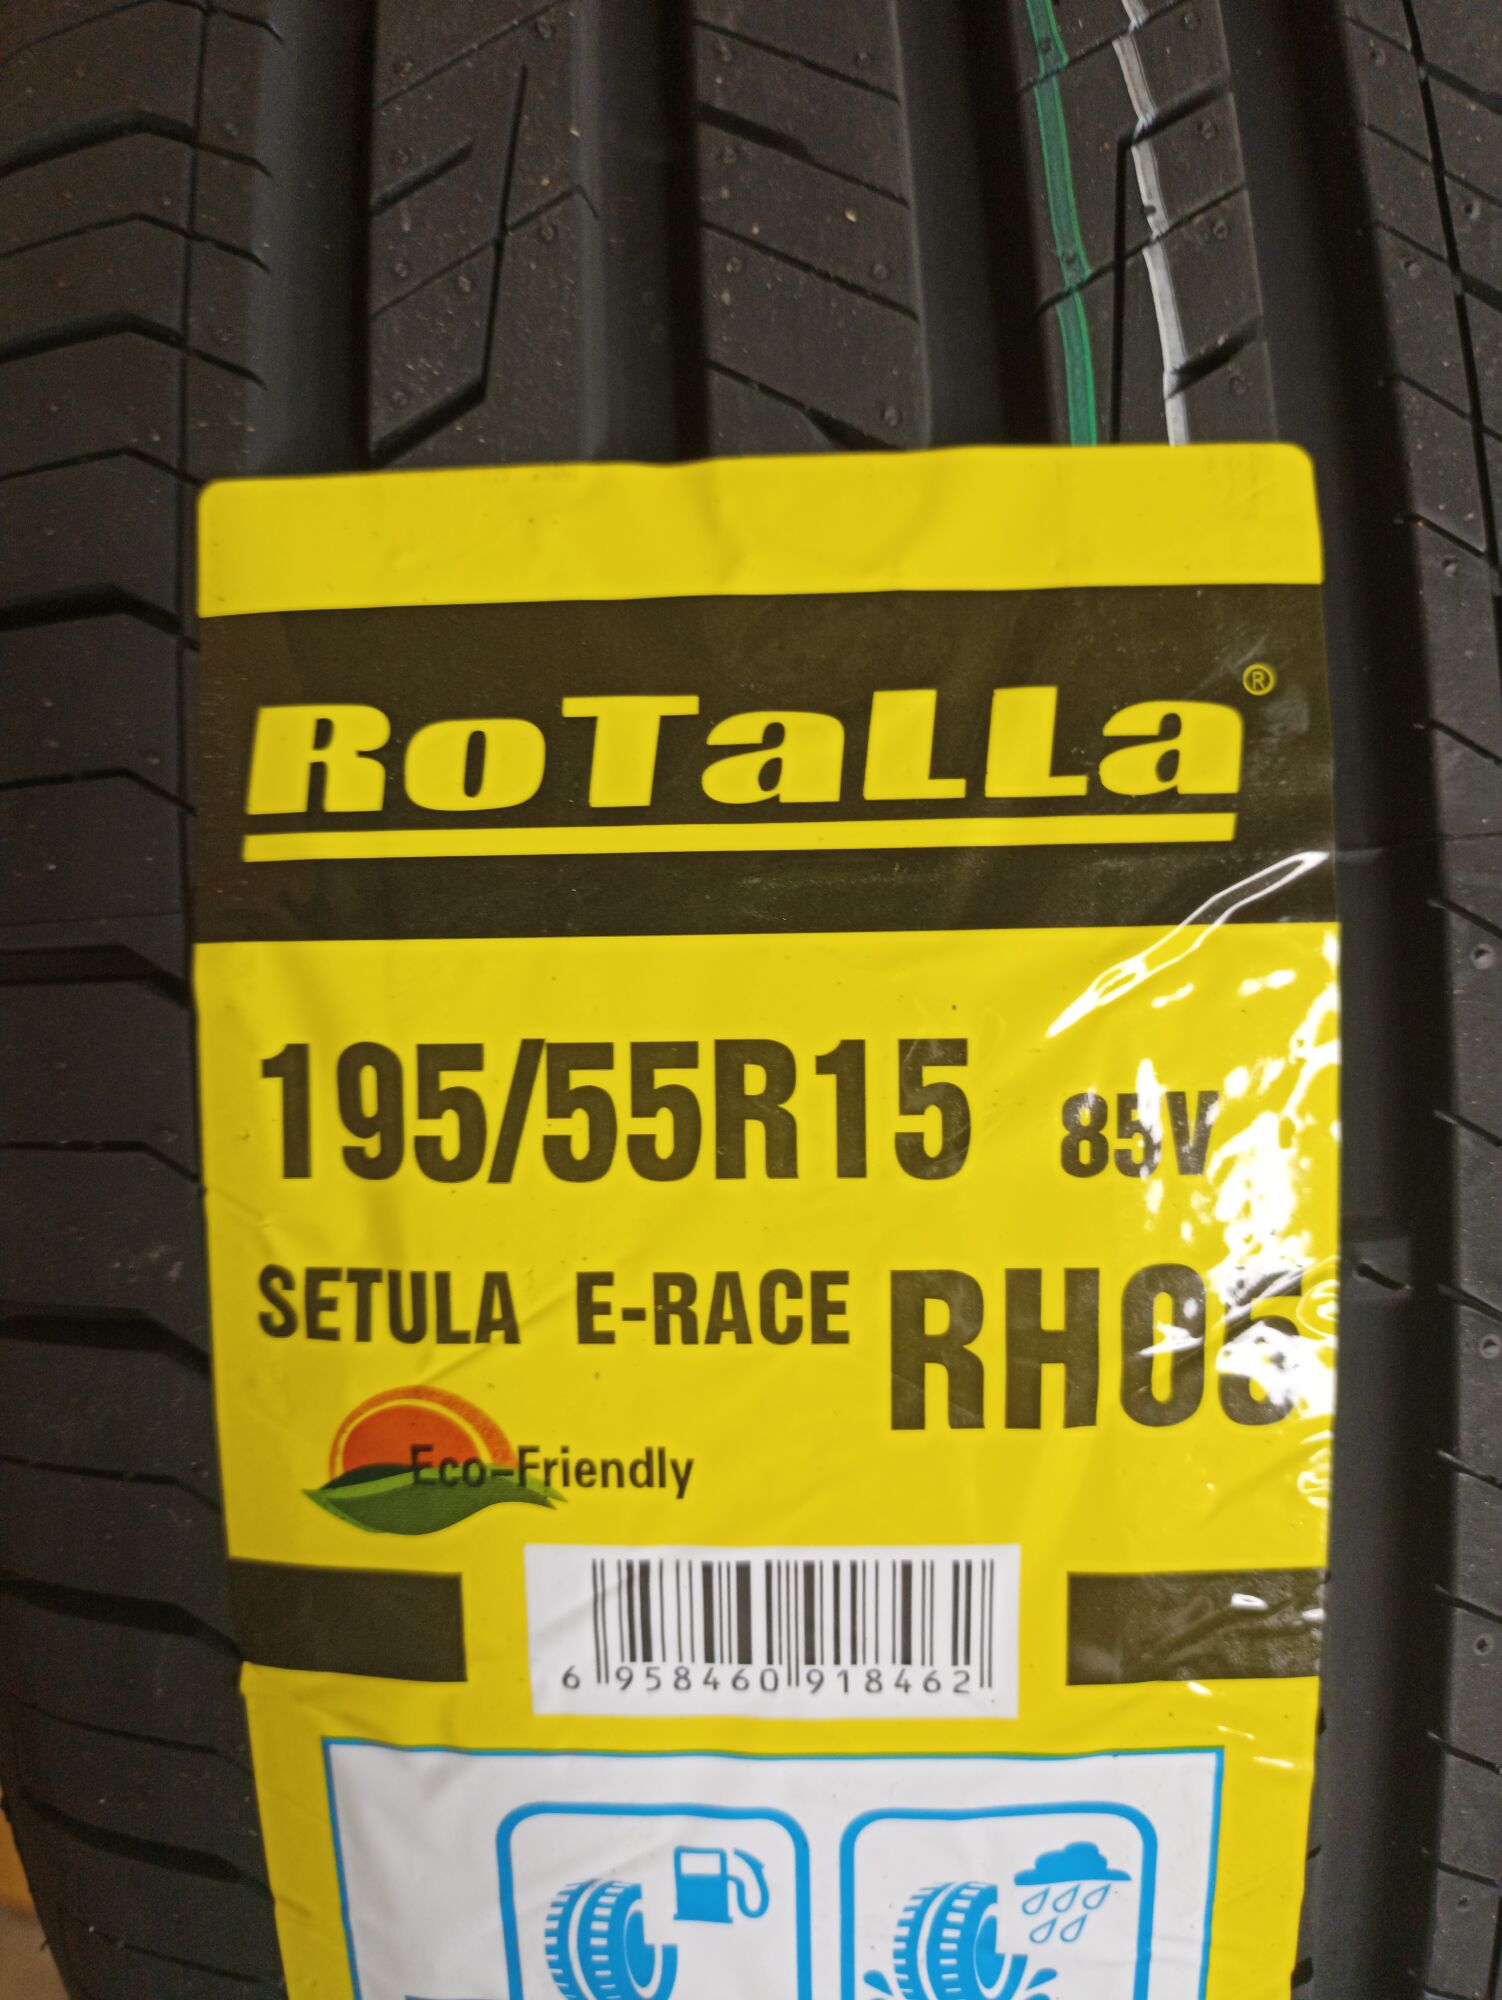 Rotalla setula w race s500. Rotalla Setula e-Race rh05. Rotalla шины производитель. Rotalla Setula rh05 195/65 r15 код производителя. Шины Rotalla лого.